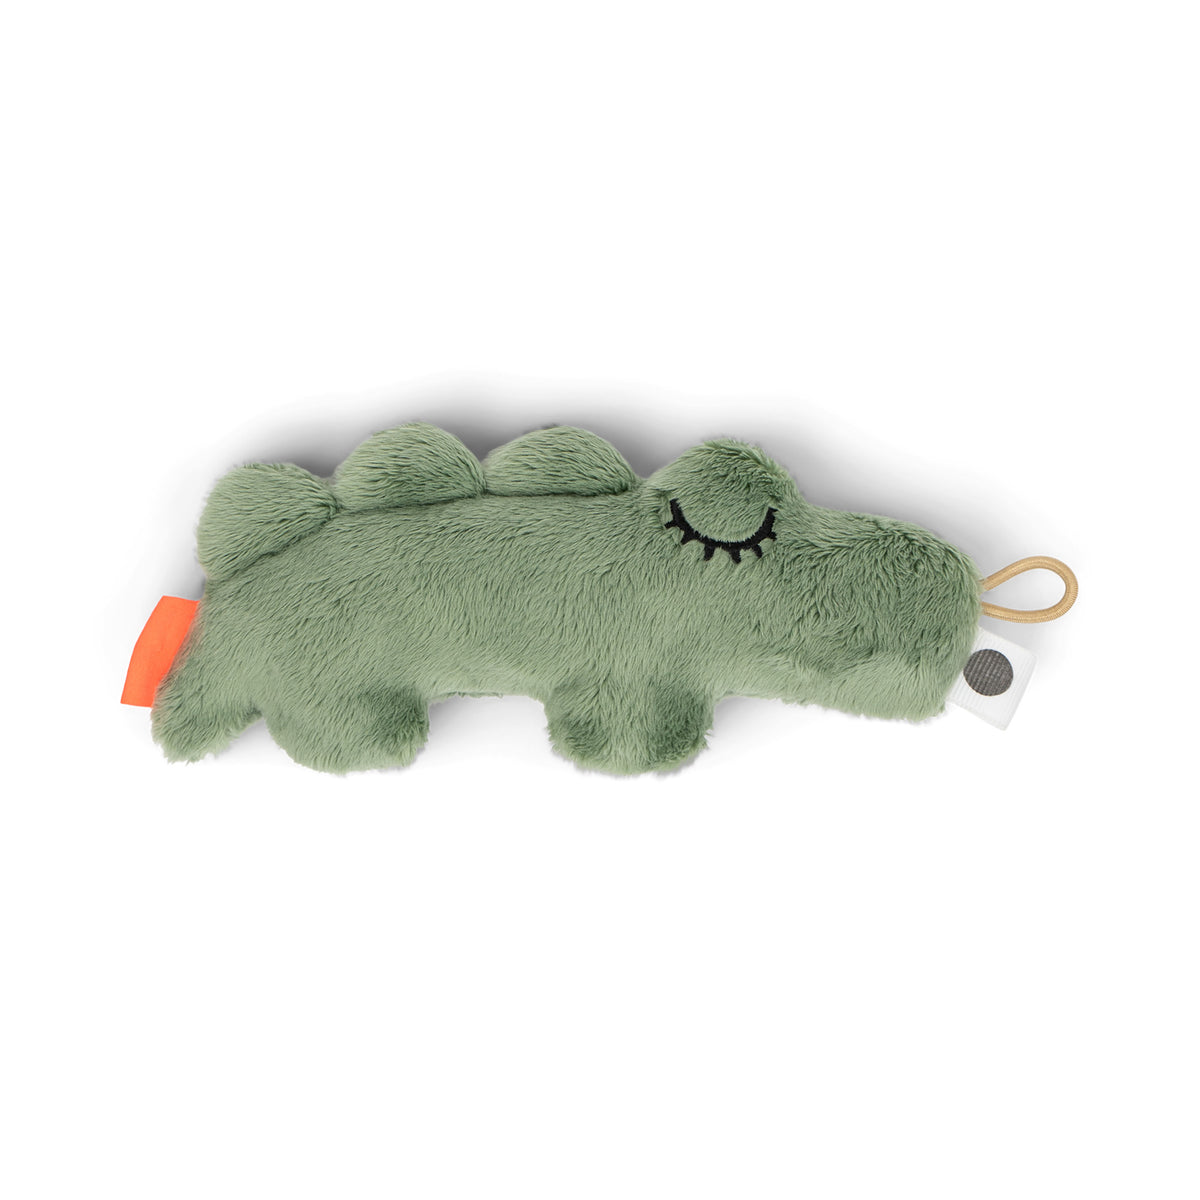 Tiny sensory rattle - Croco - Green - Back